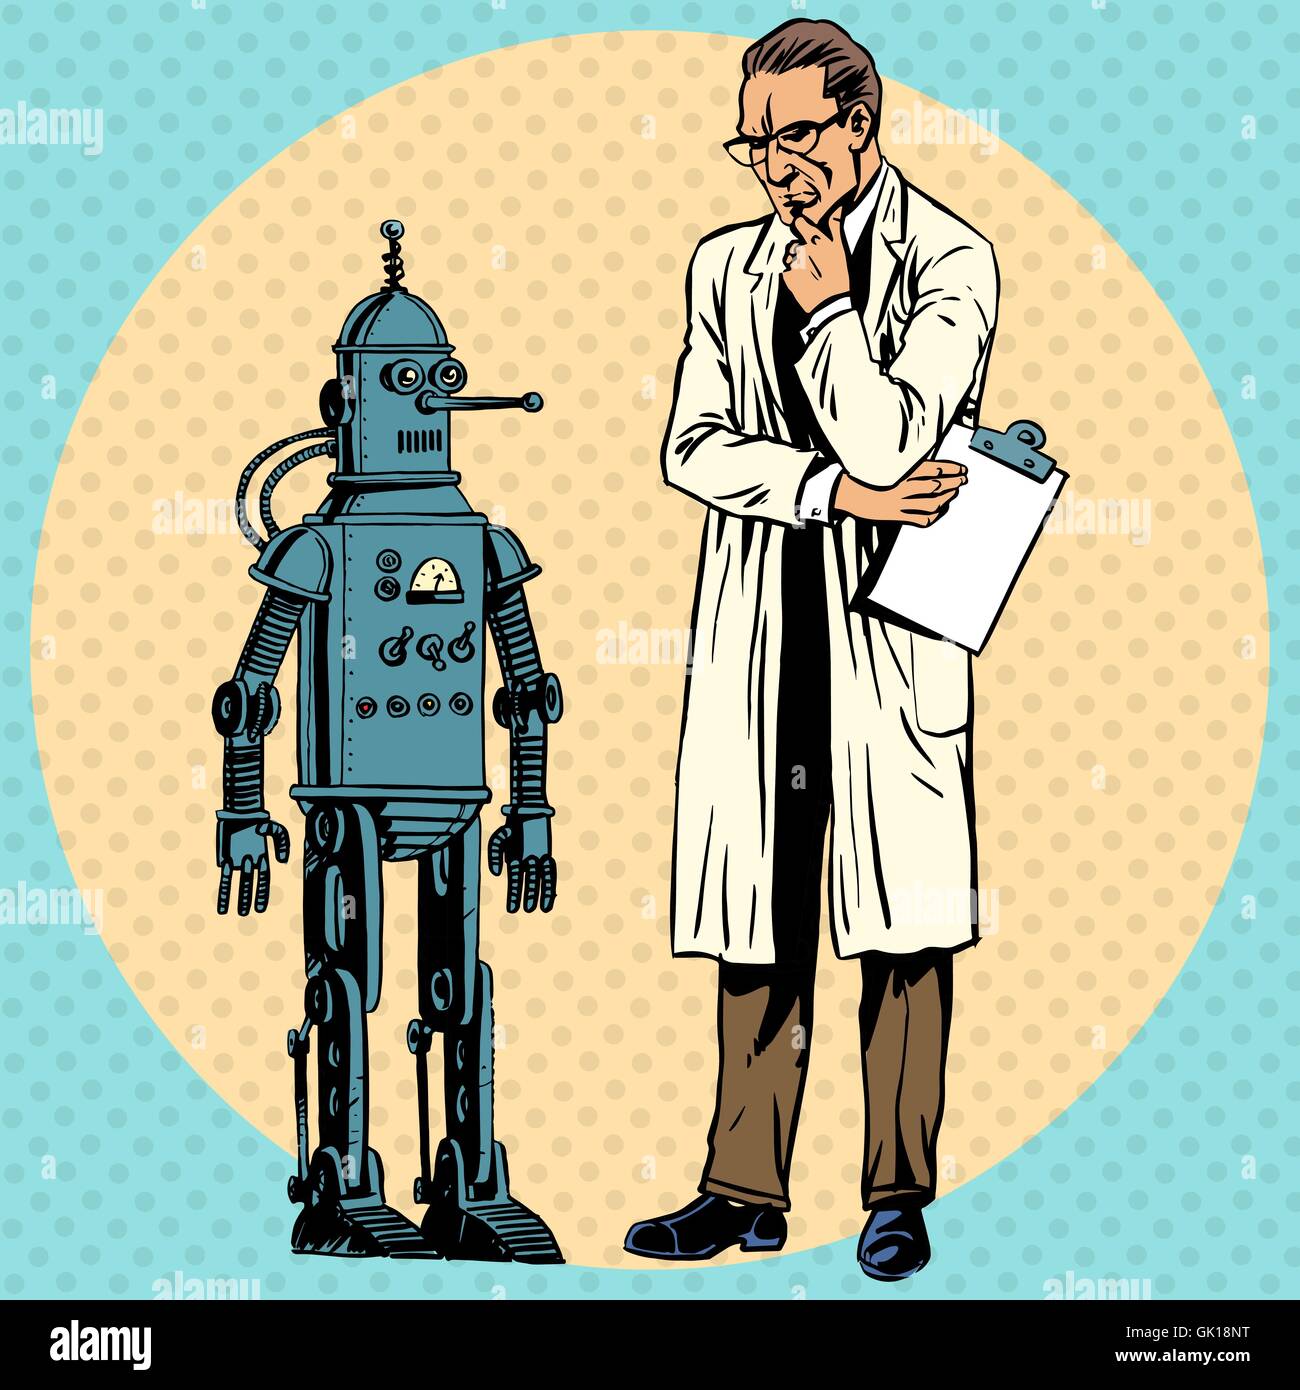 Professor scientist and robot. Creator gadget retro technology Stock Vector